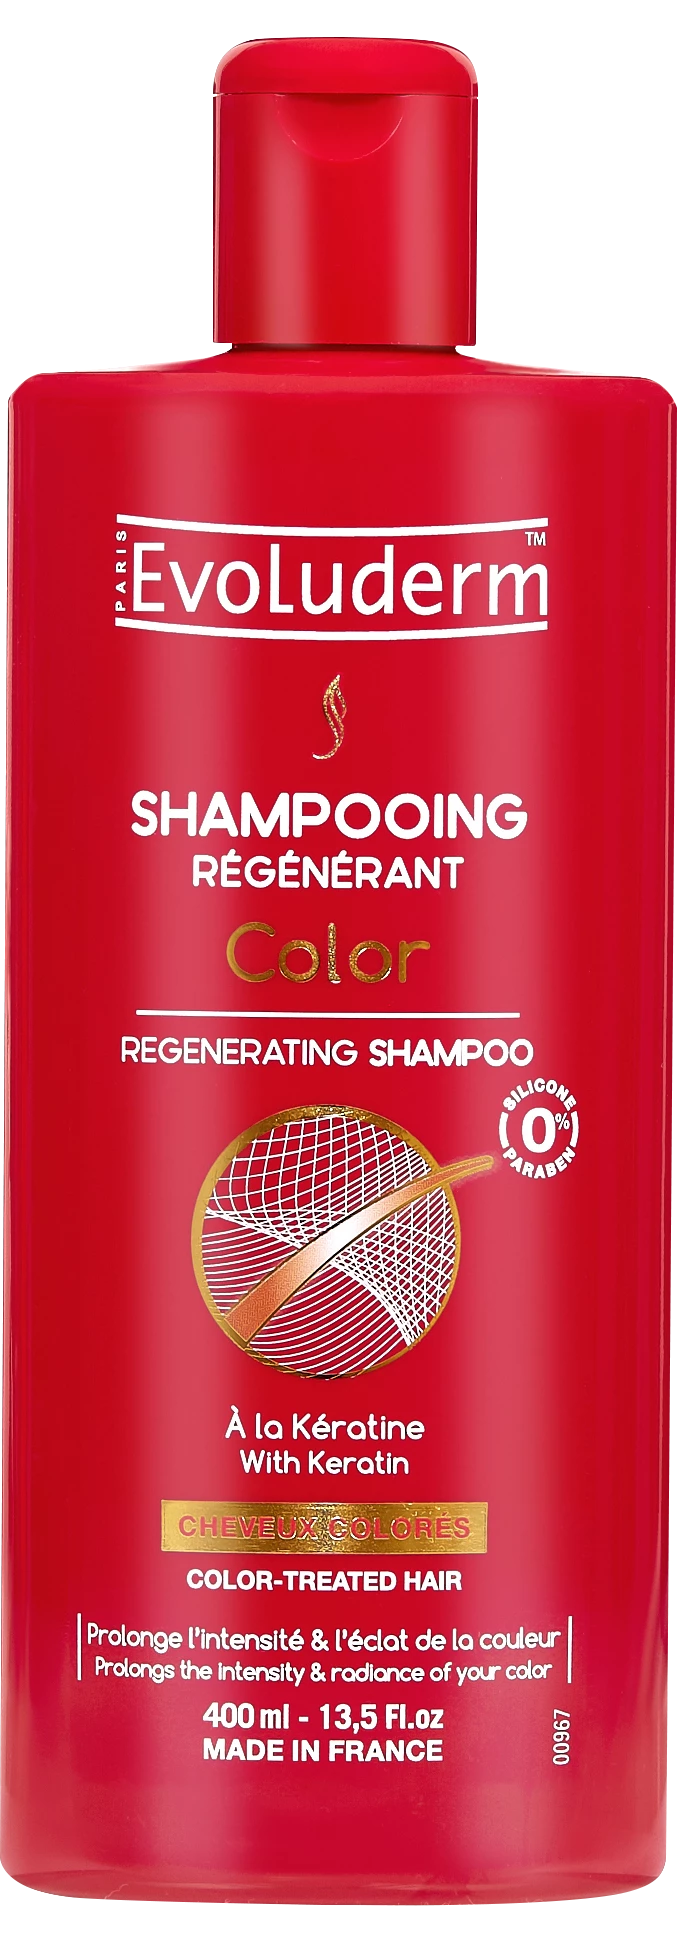 Color Regenerating Shampoo, 400ml - EVOLUDERM